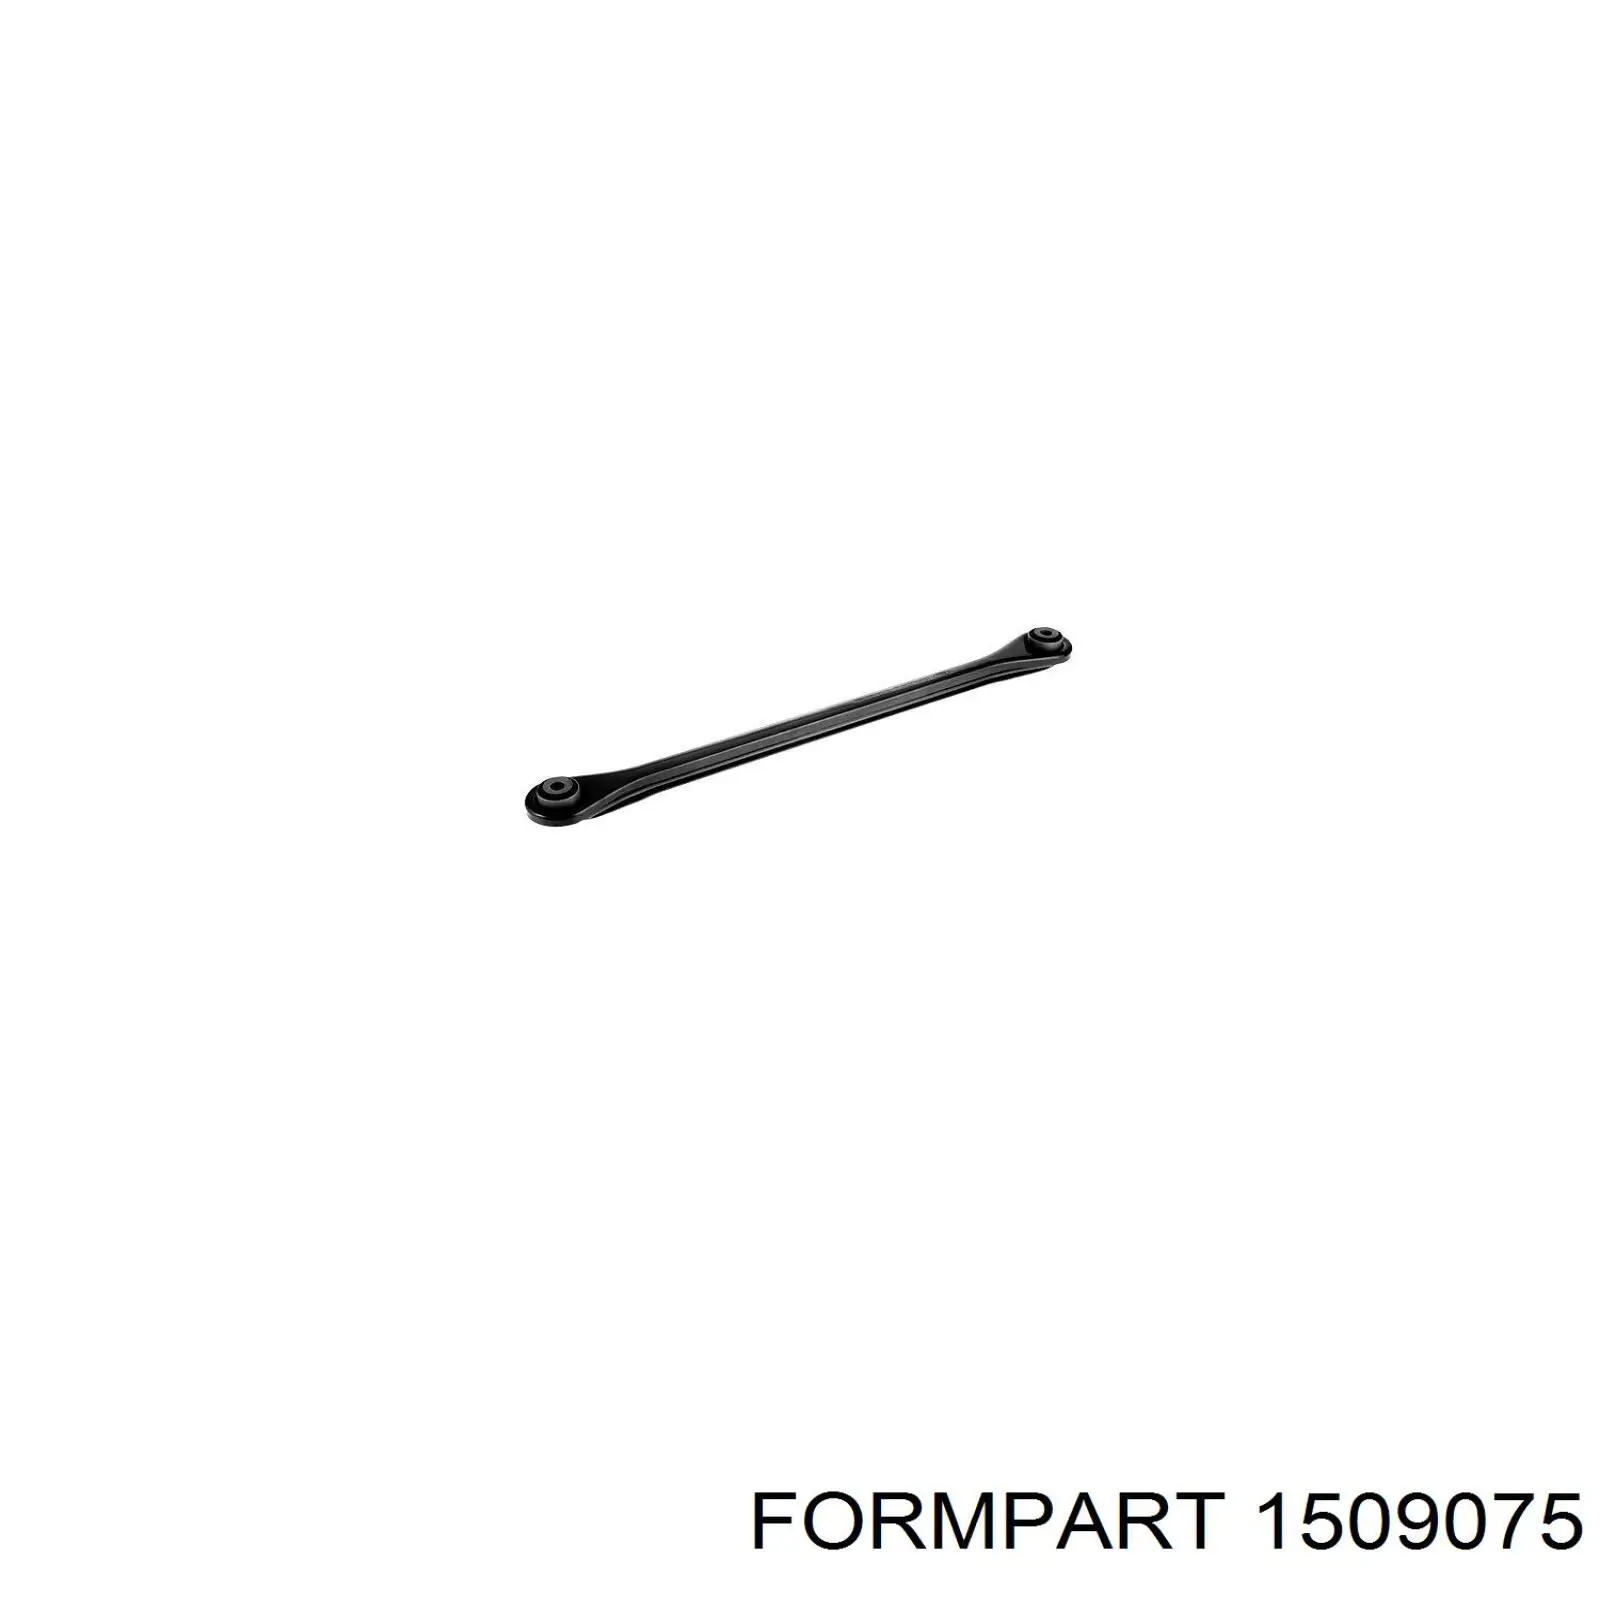 1509075 Formpart/Otoform palanca trasera inferior izquierda/derecha